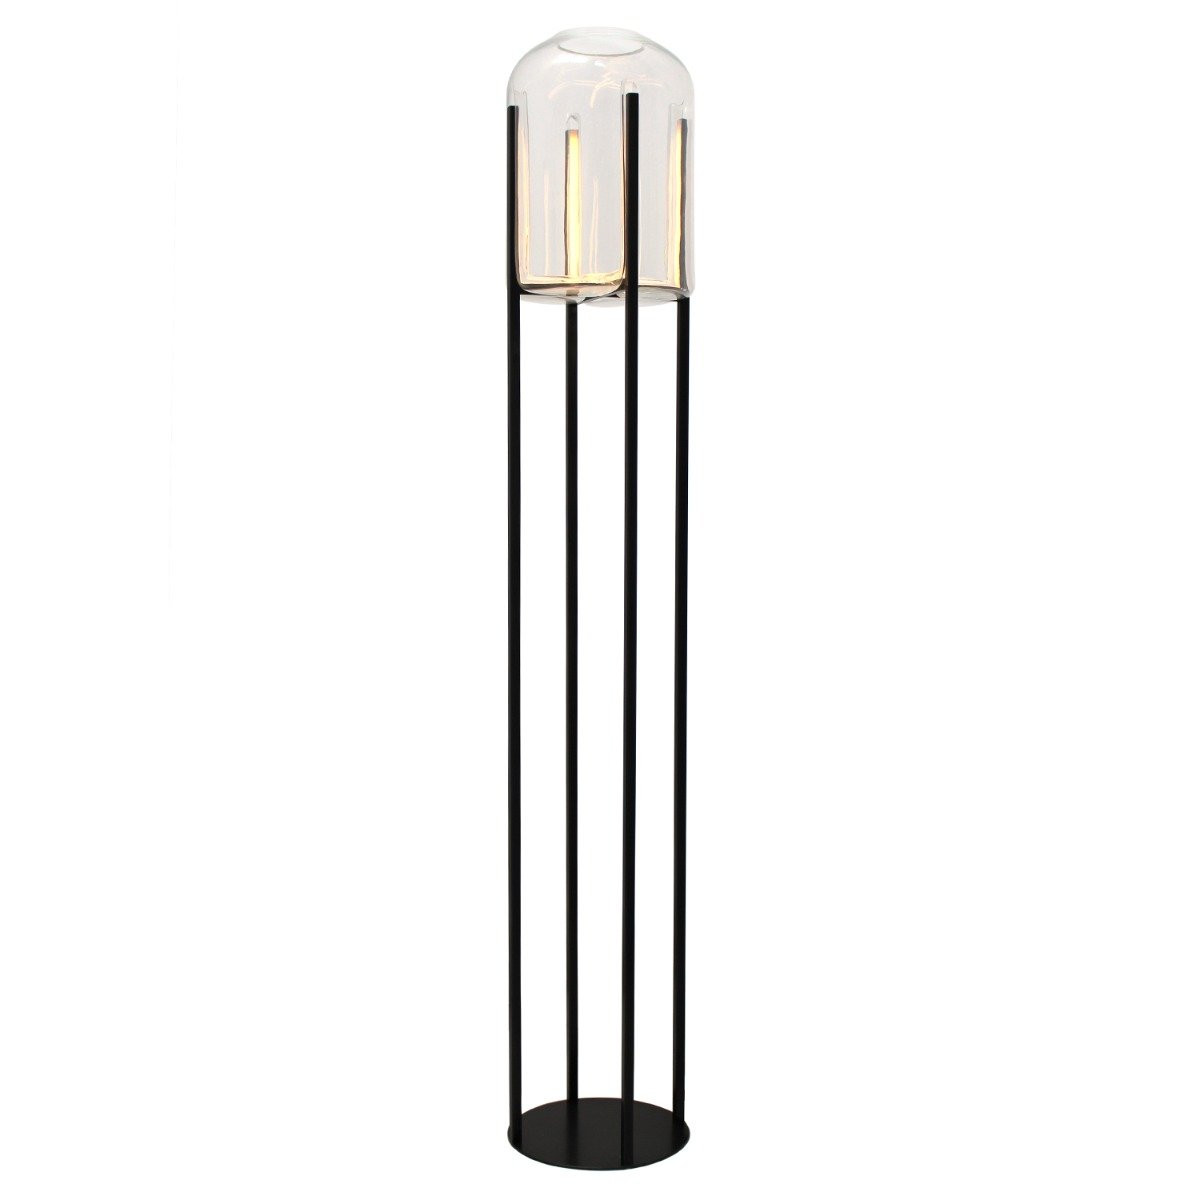 Lampadaires de luxe BELLADONNA, H150cm CONCEPT VERRE-Lampadaire-Aluminium, Verre soufflé